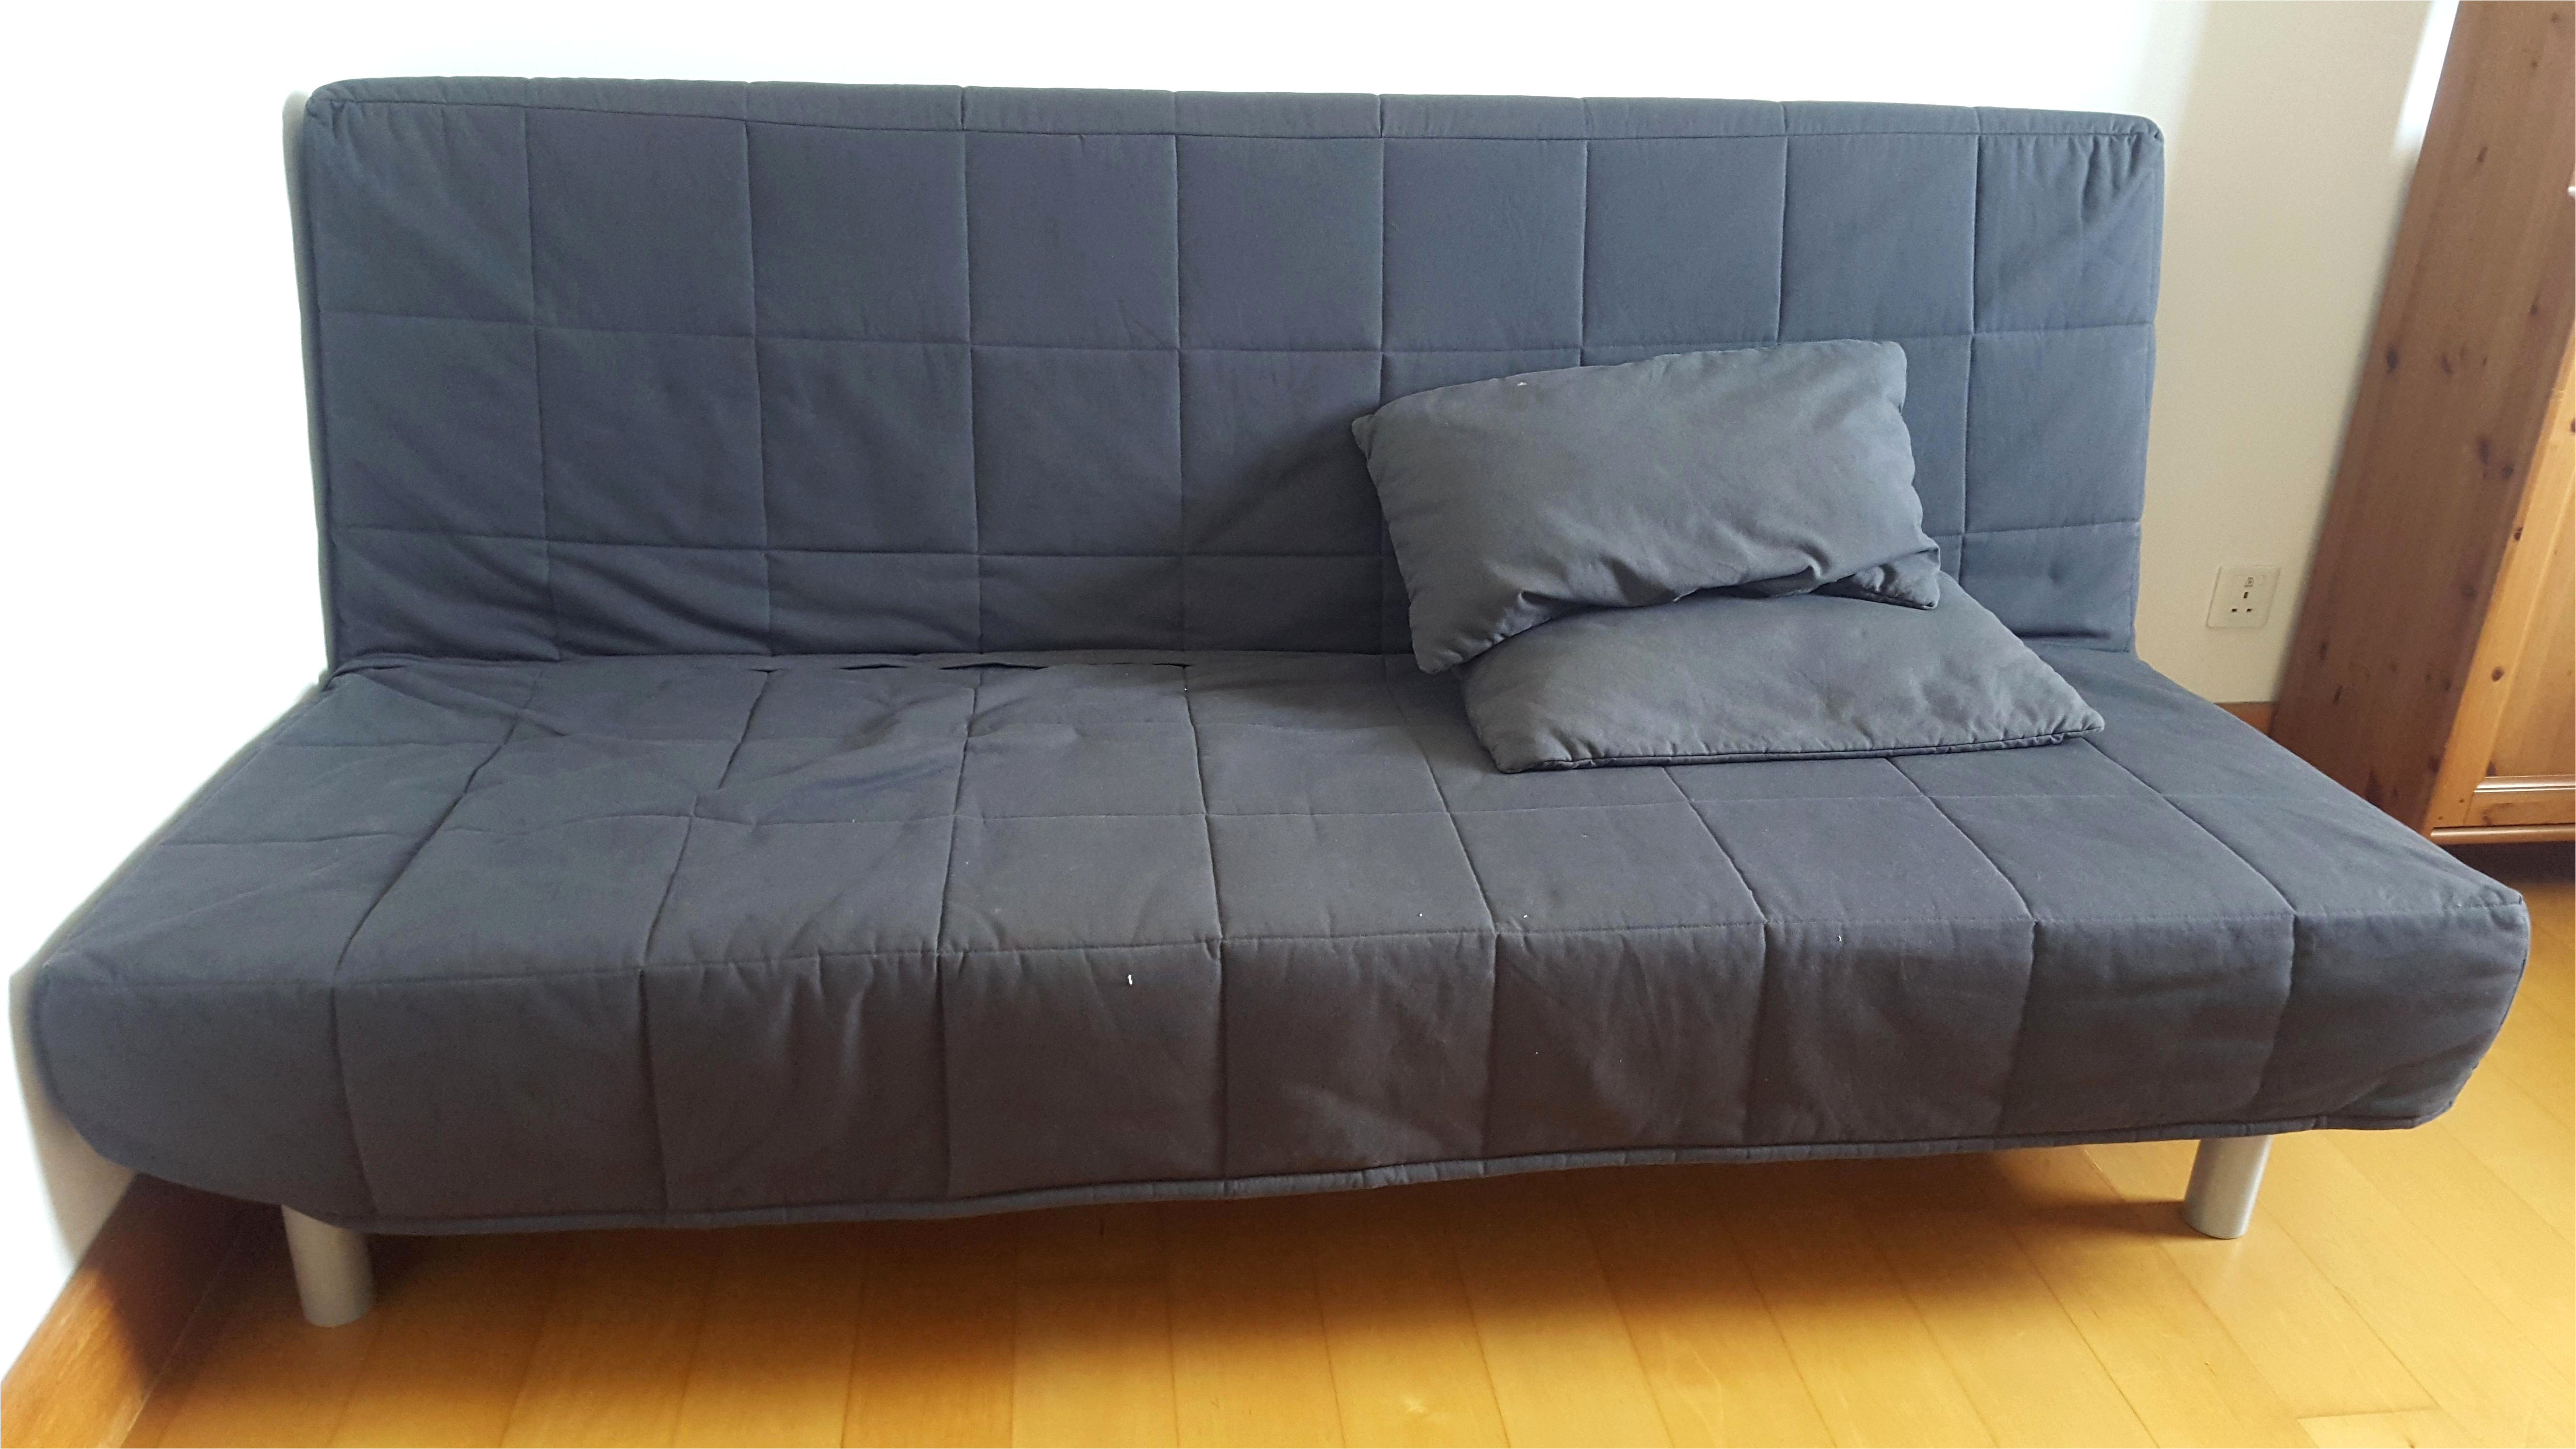 ikea friheten sleeper sofa bed fits in nissan